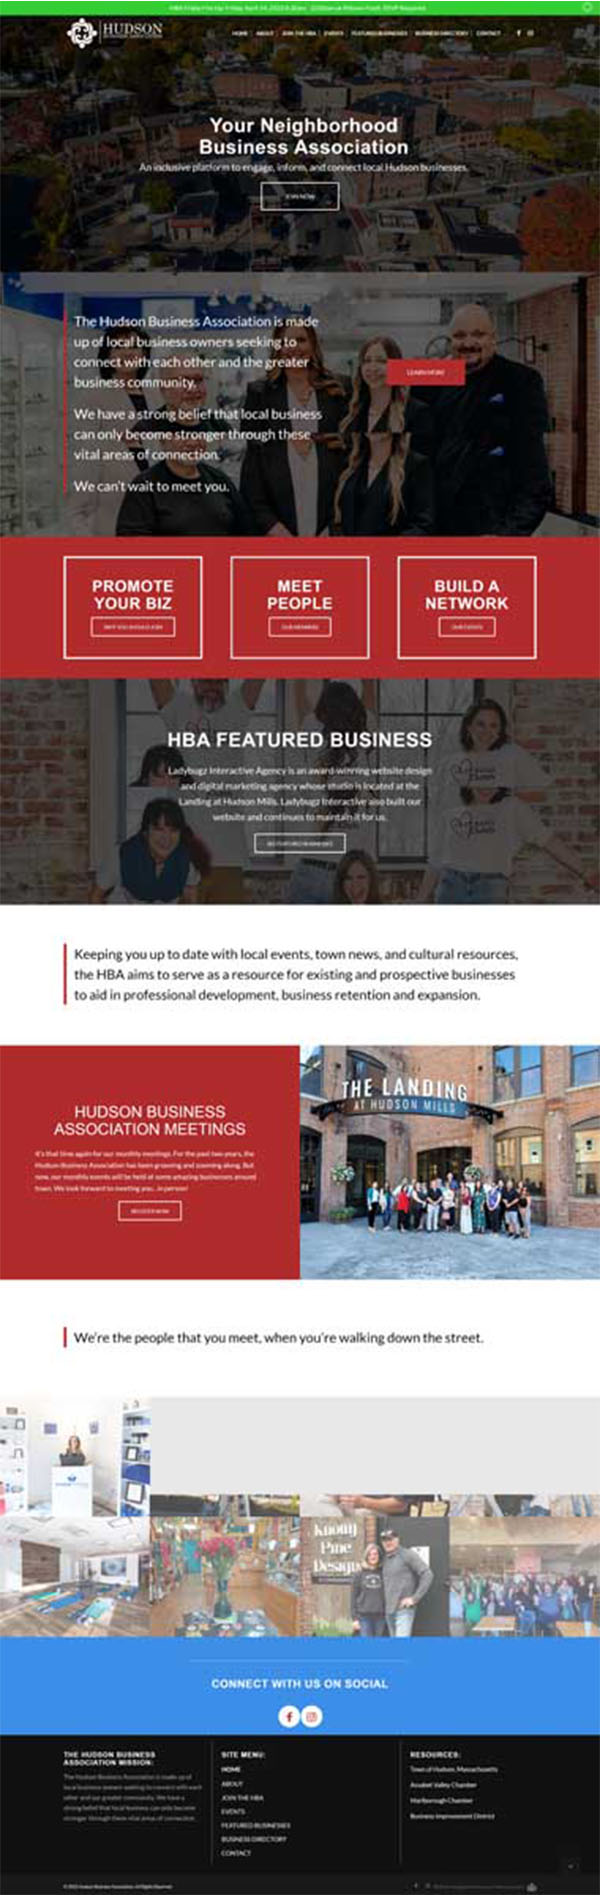 Hudson Business Association - Business Networking Website Design Scroll example